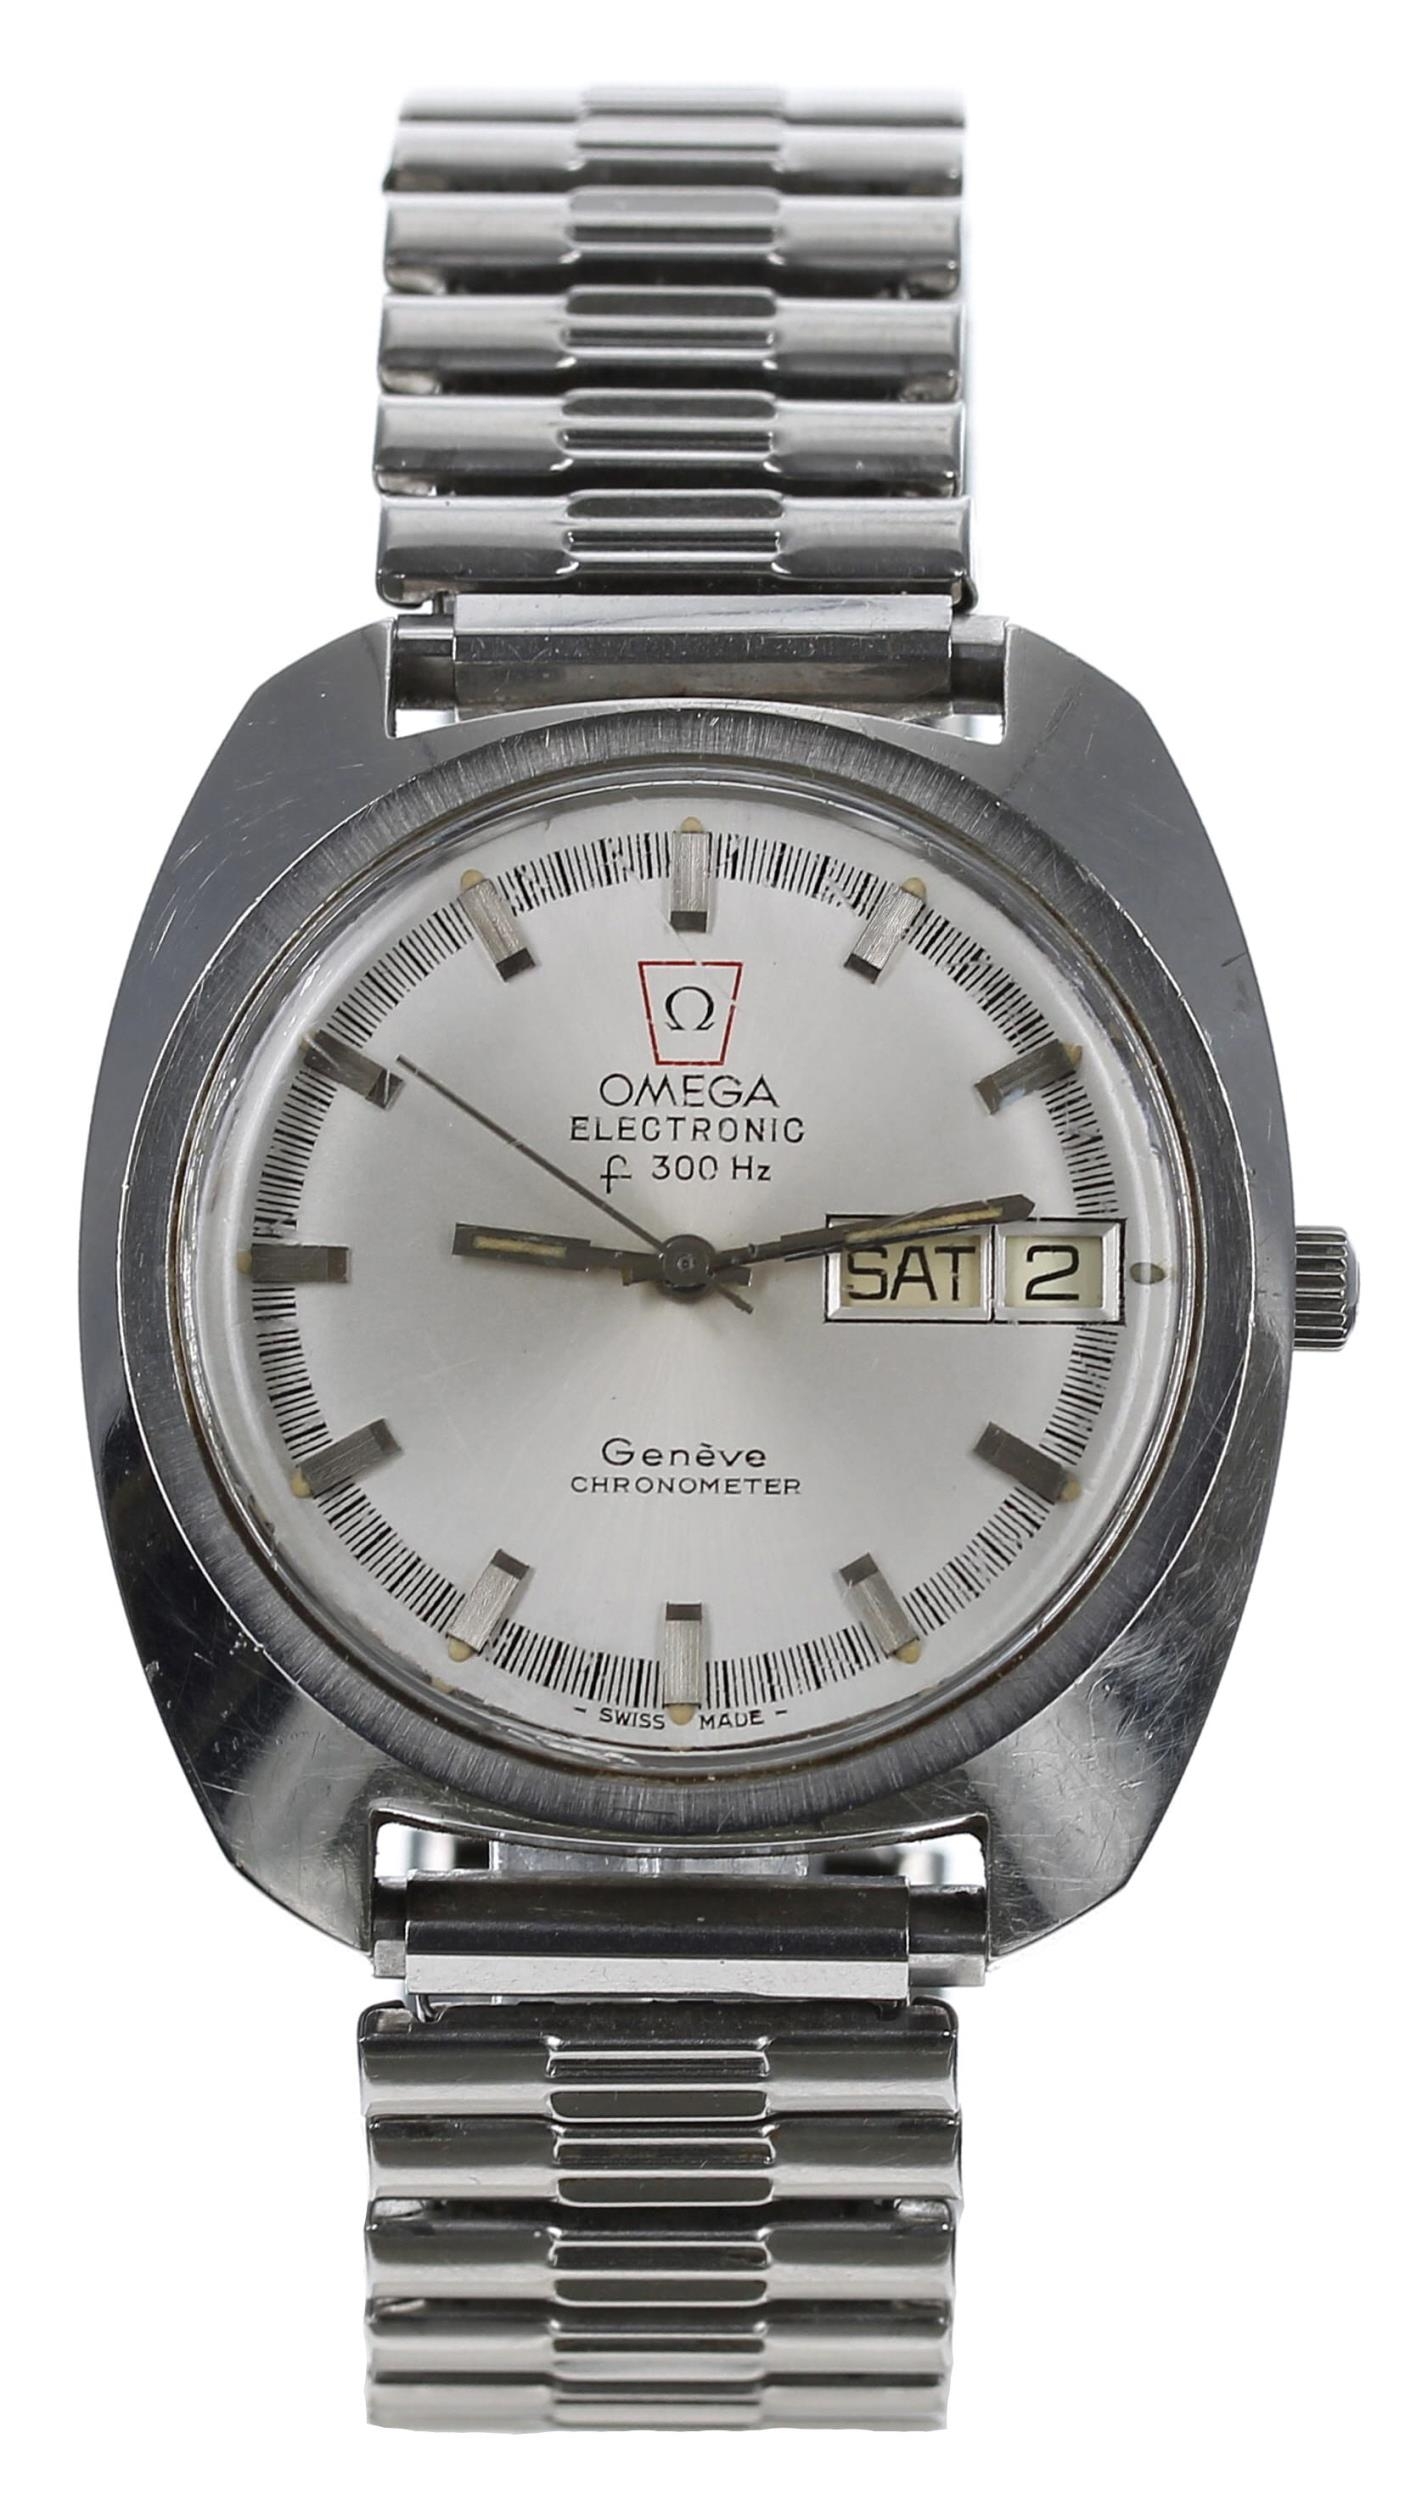 OMEGA Chronometer Electronic F300HZ - 時計